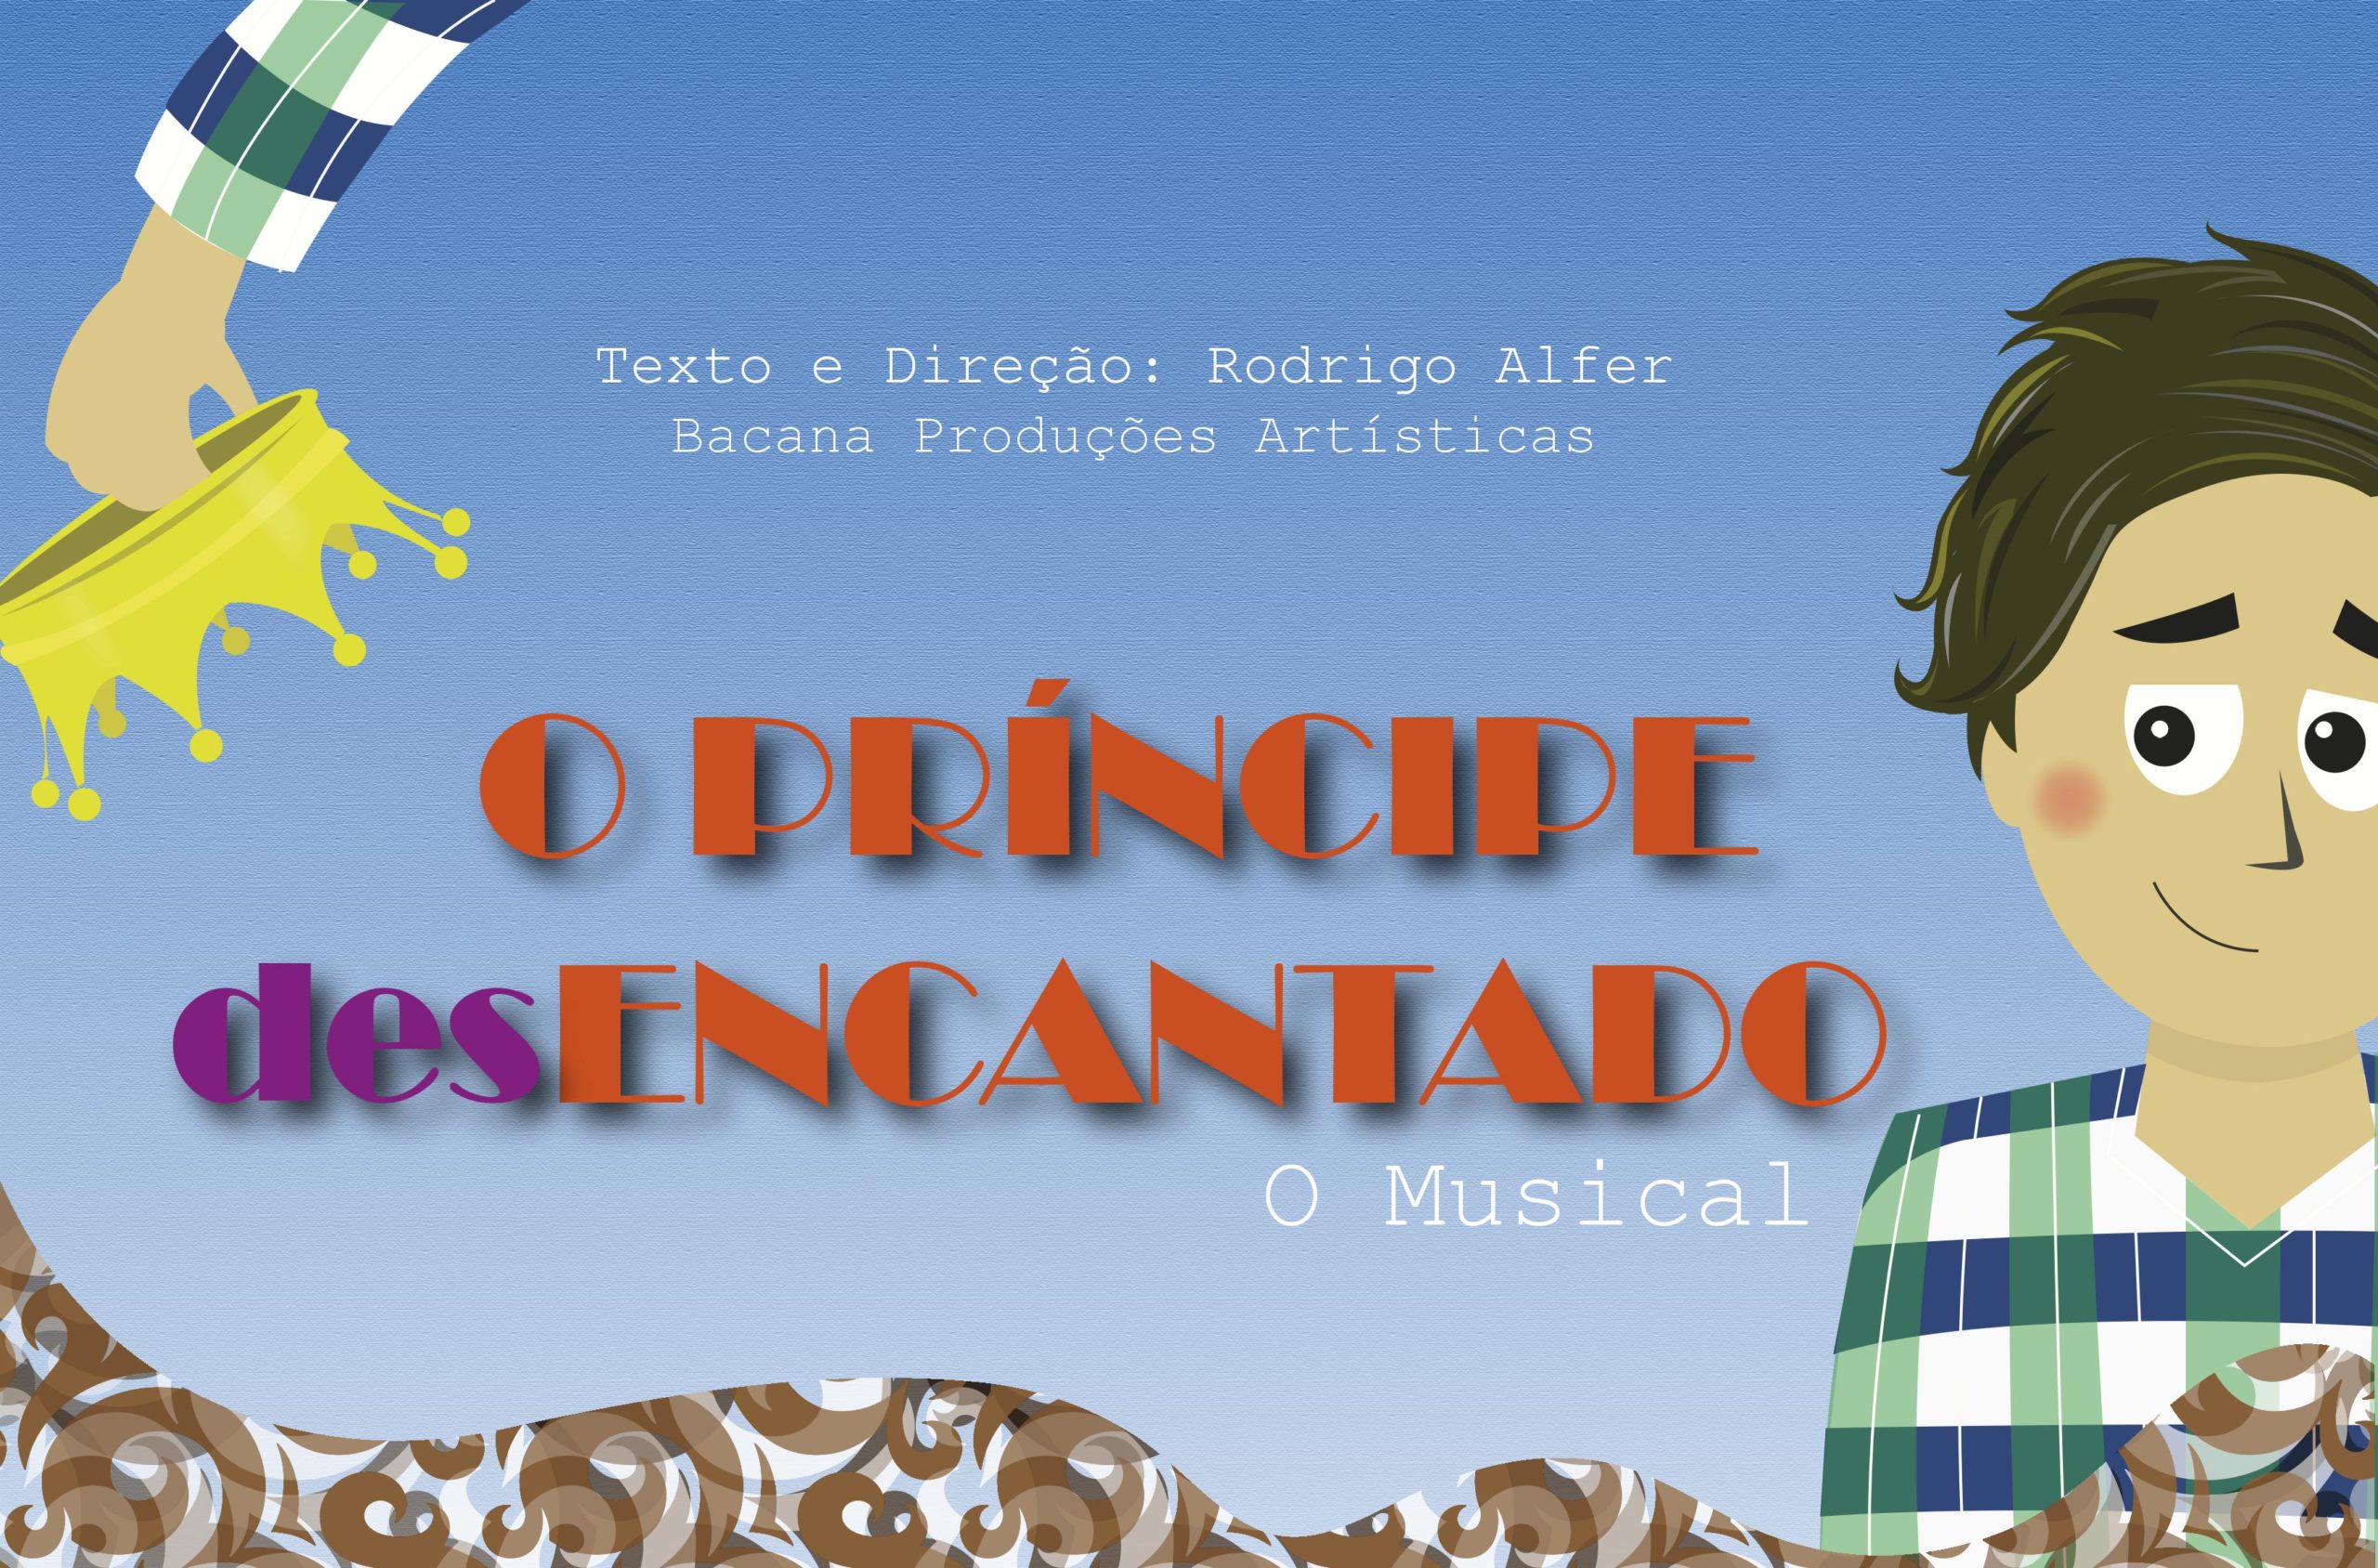 Photo of Musical infanto-juvenil “O Príncipe desEncantado” aborda identidade de gênero